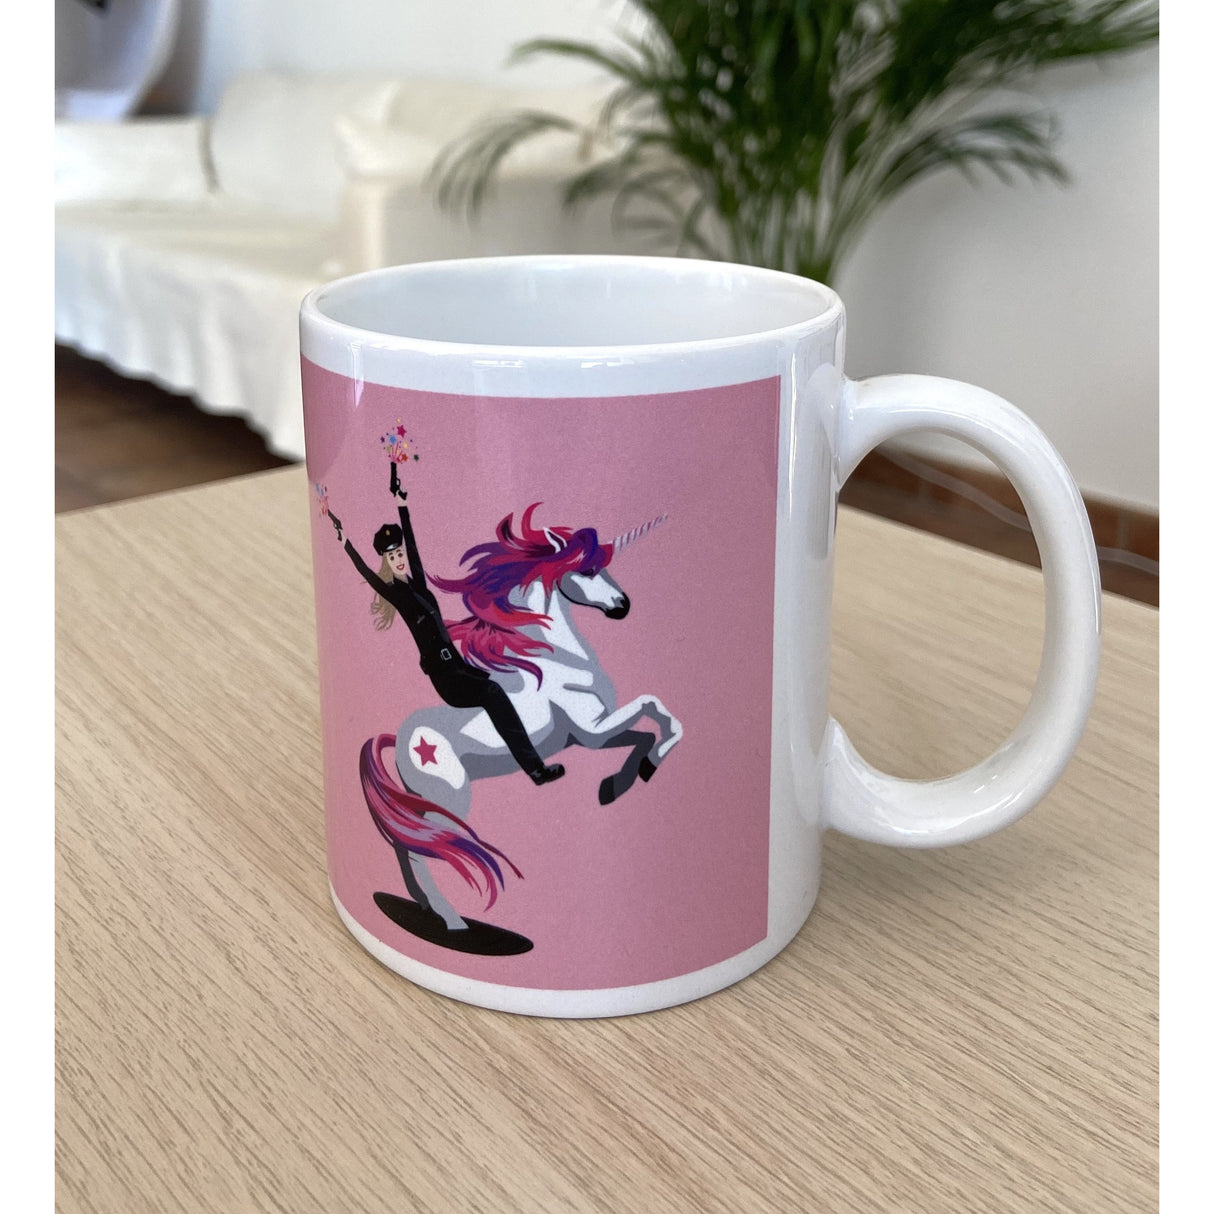 Police Unicorn Mug